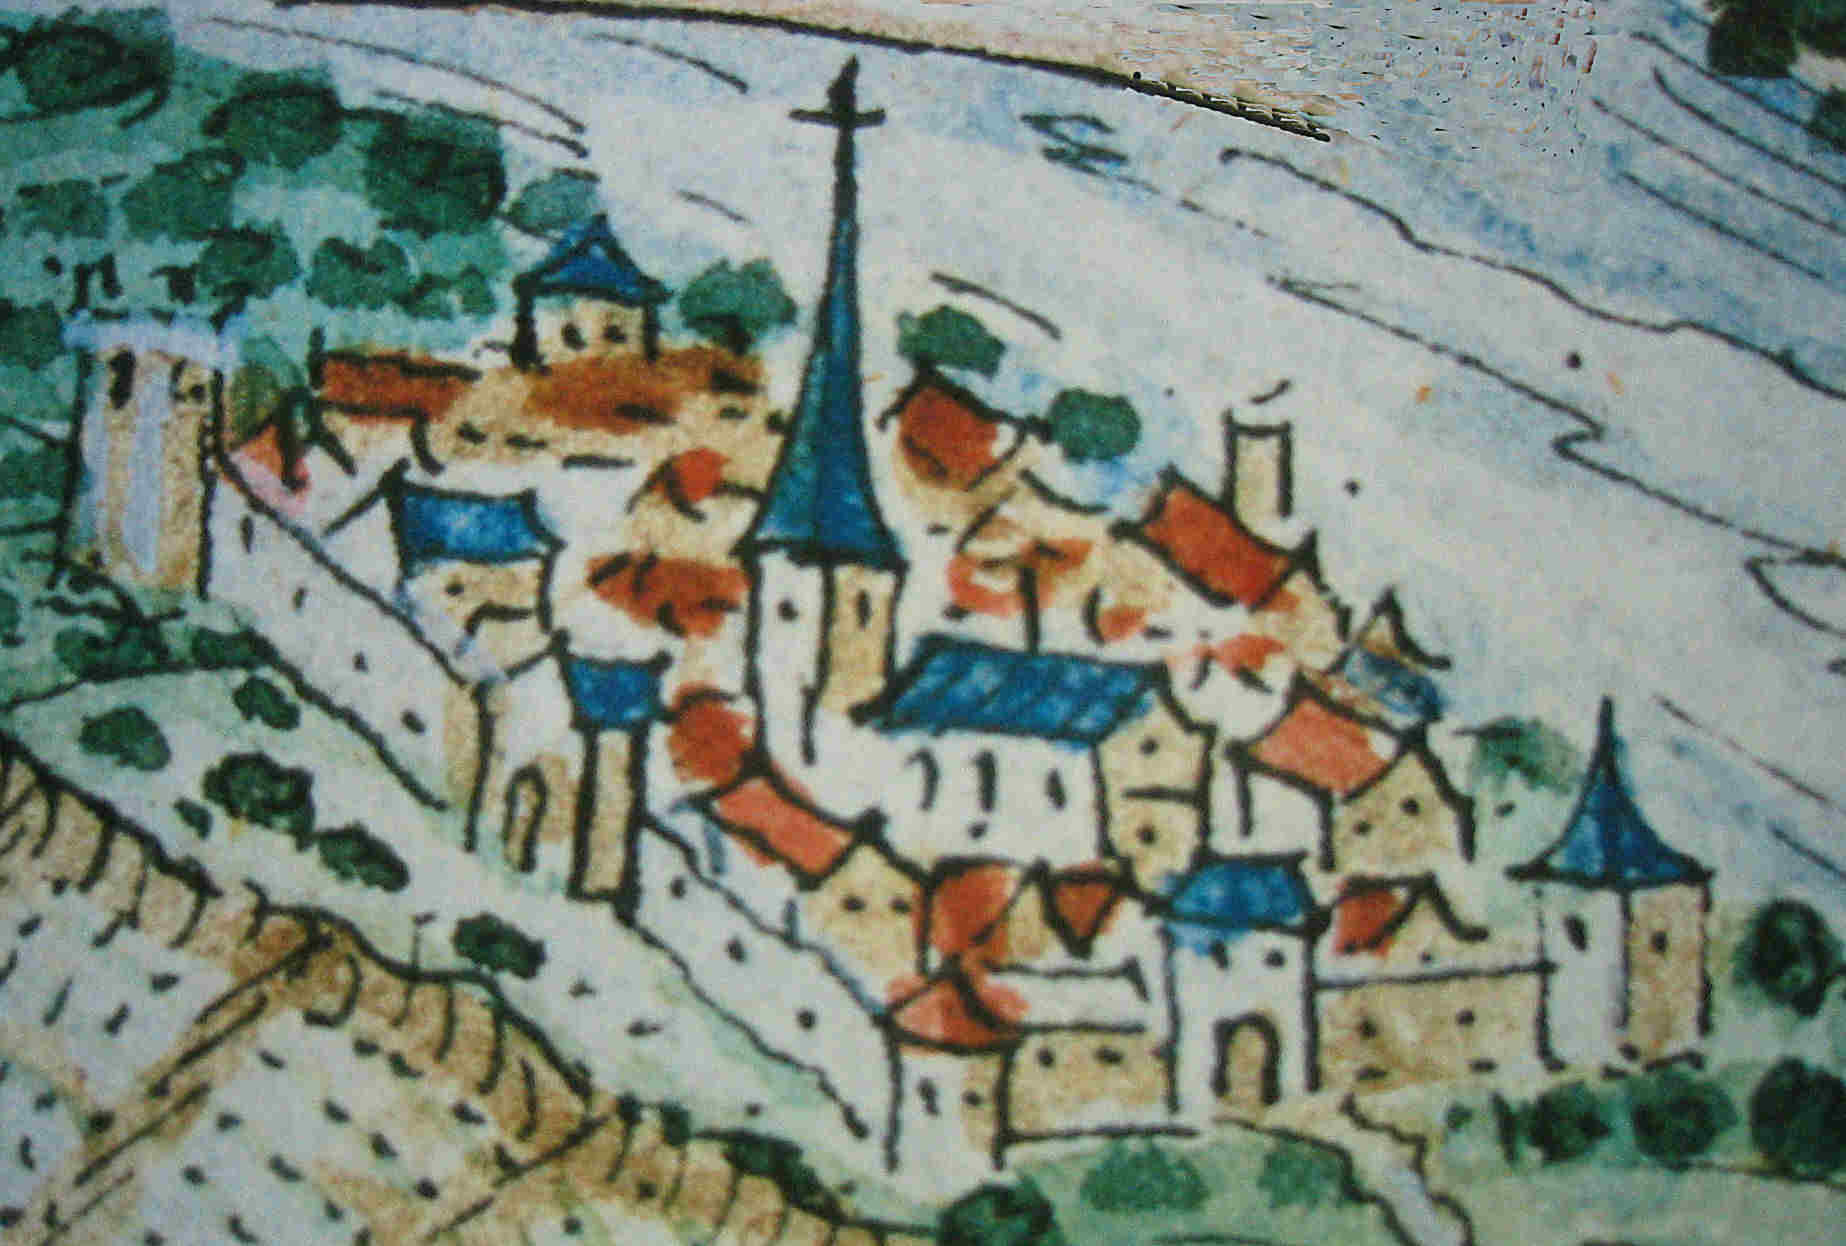 Stadtbefestigung Obernburg älteste Ansicht 1615